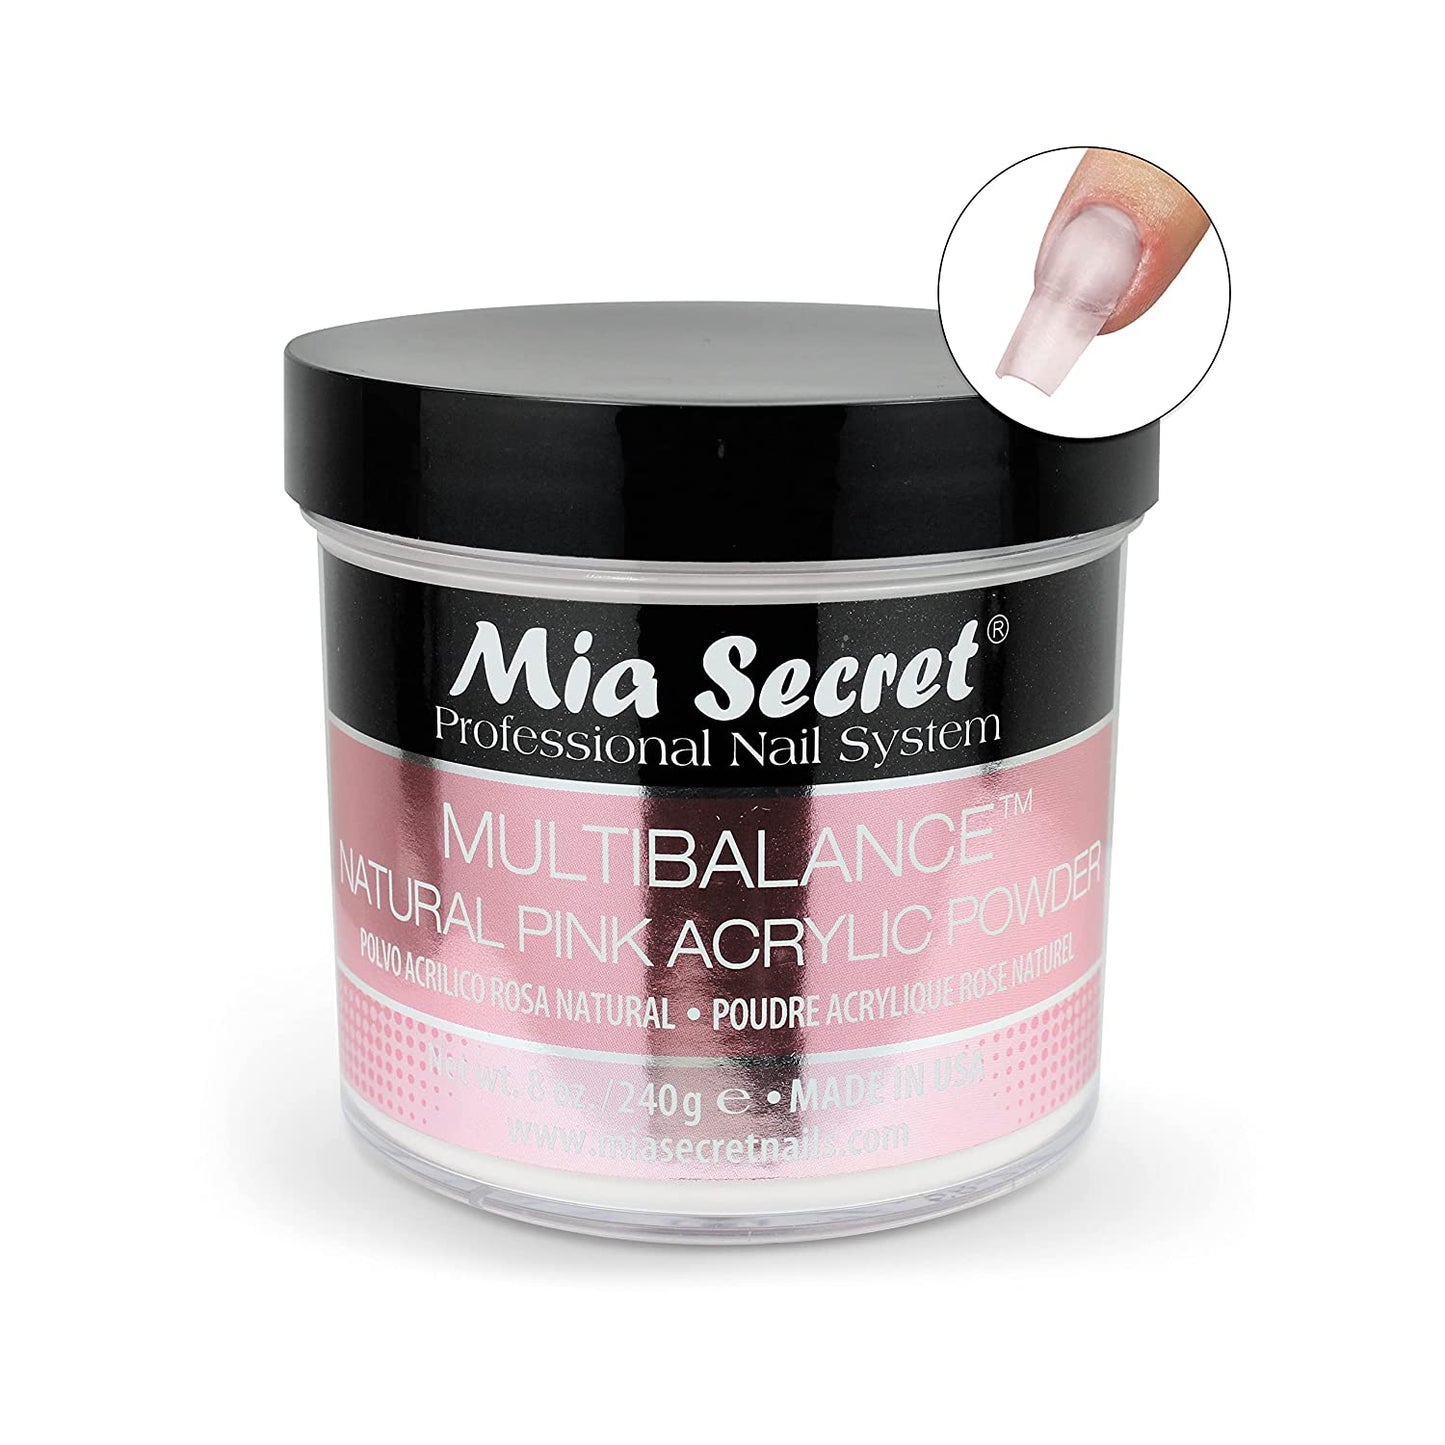 Mia Secret Multibalance Natural Pink Acrylic Nail Powder 8oz